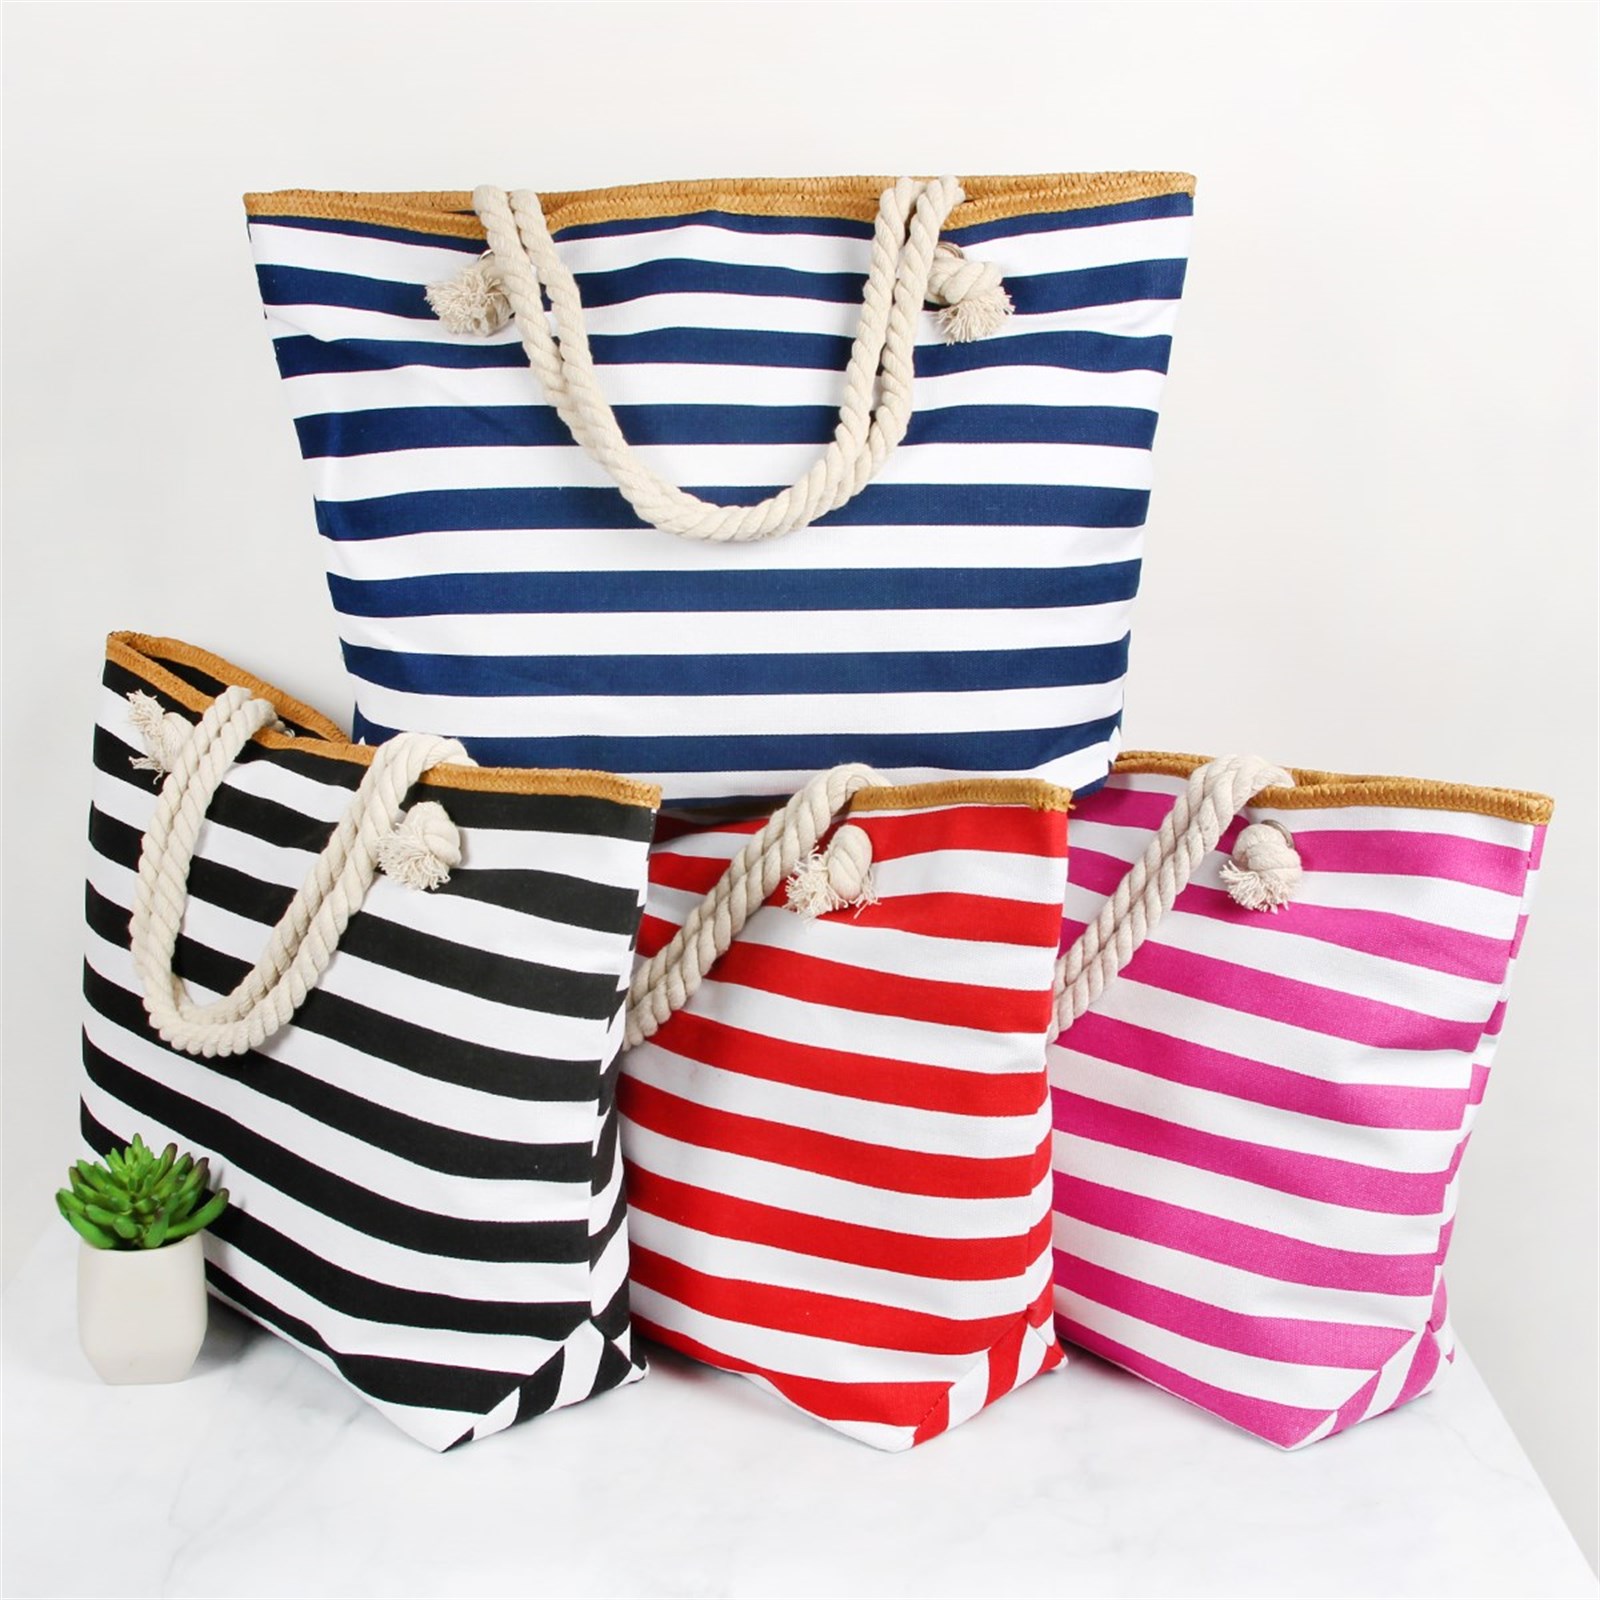 Jumbo Stripe Tote Bag ONLY $12.98 SHIPPED {Reg $35.00}